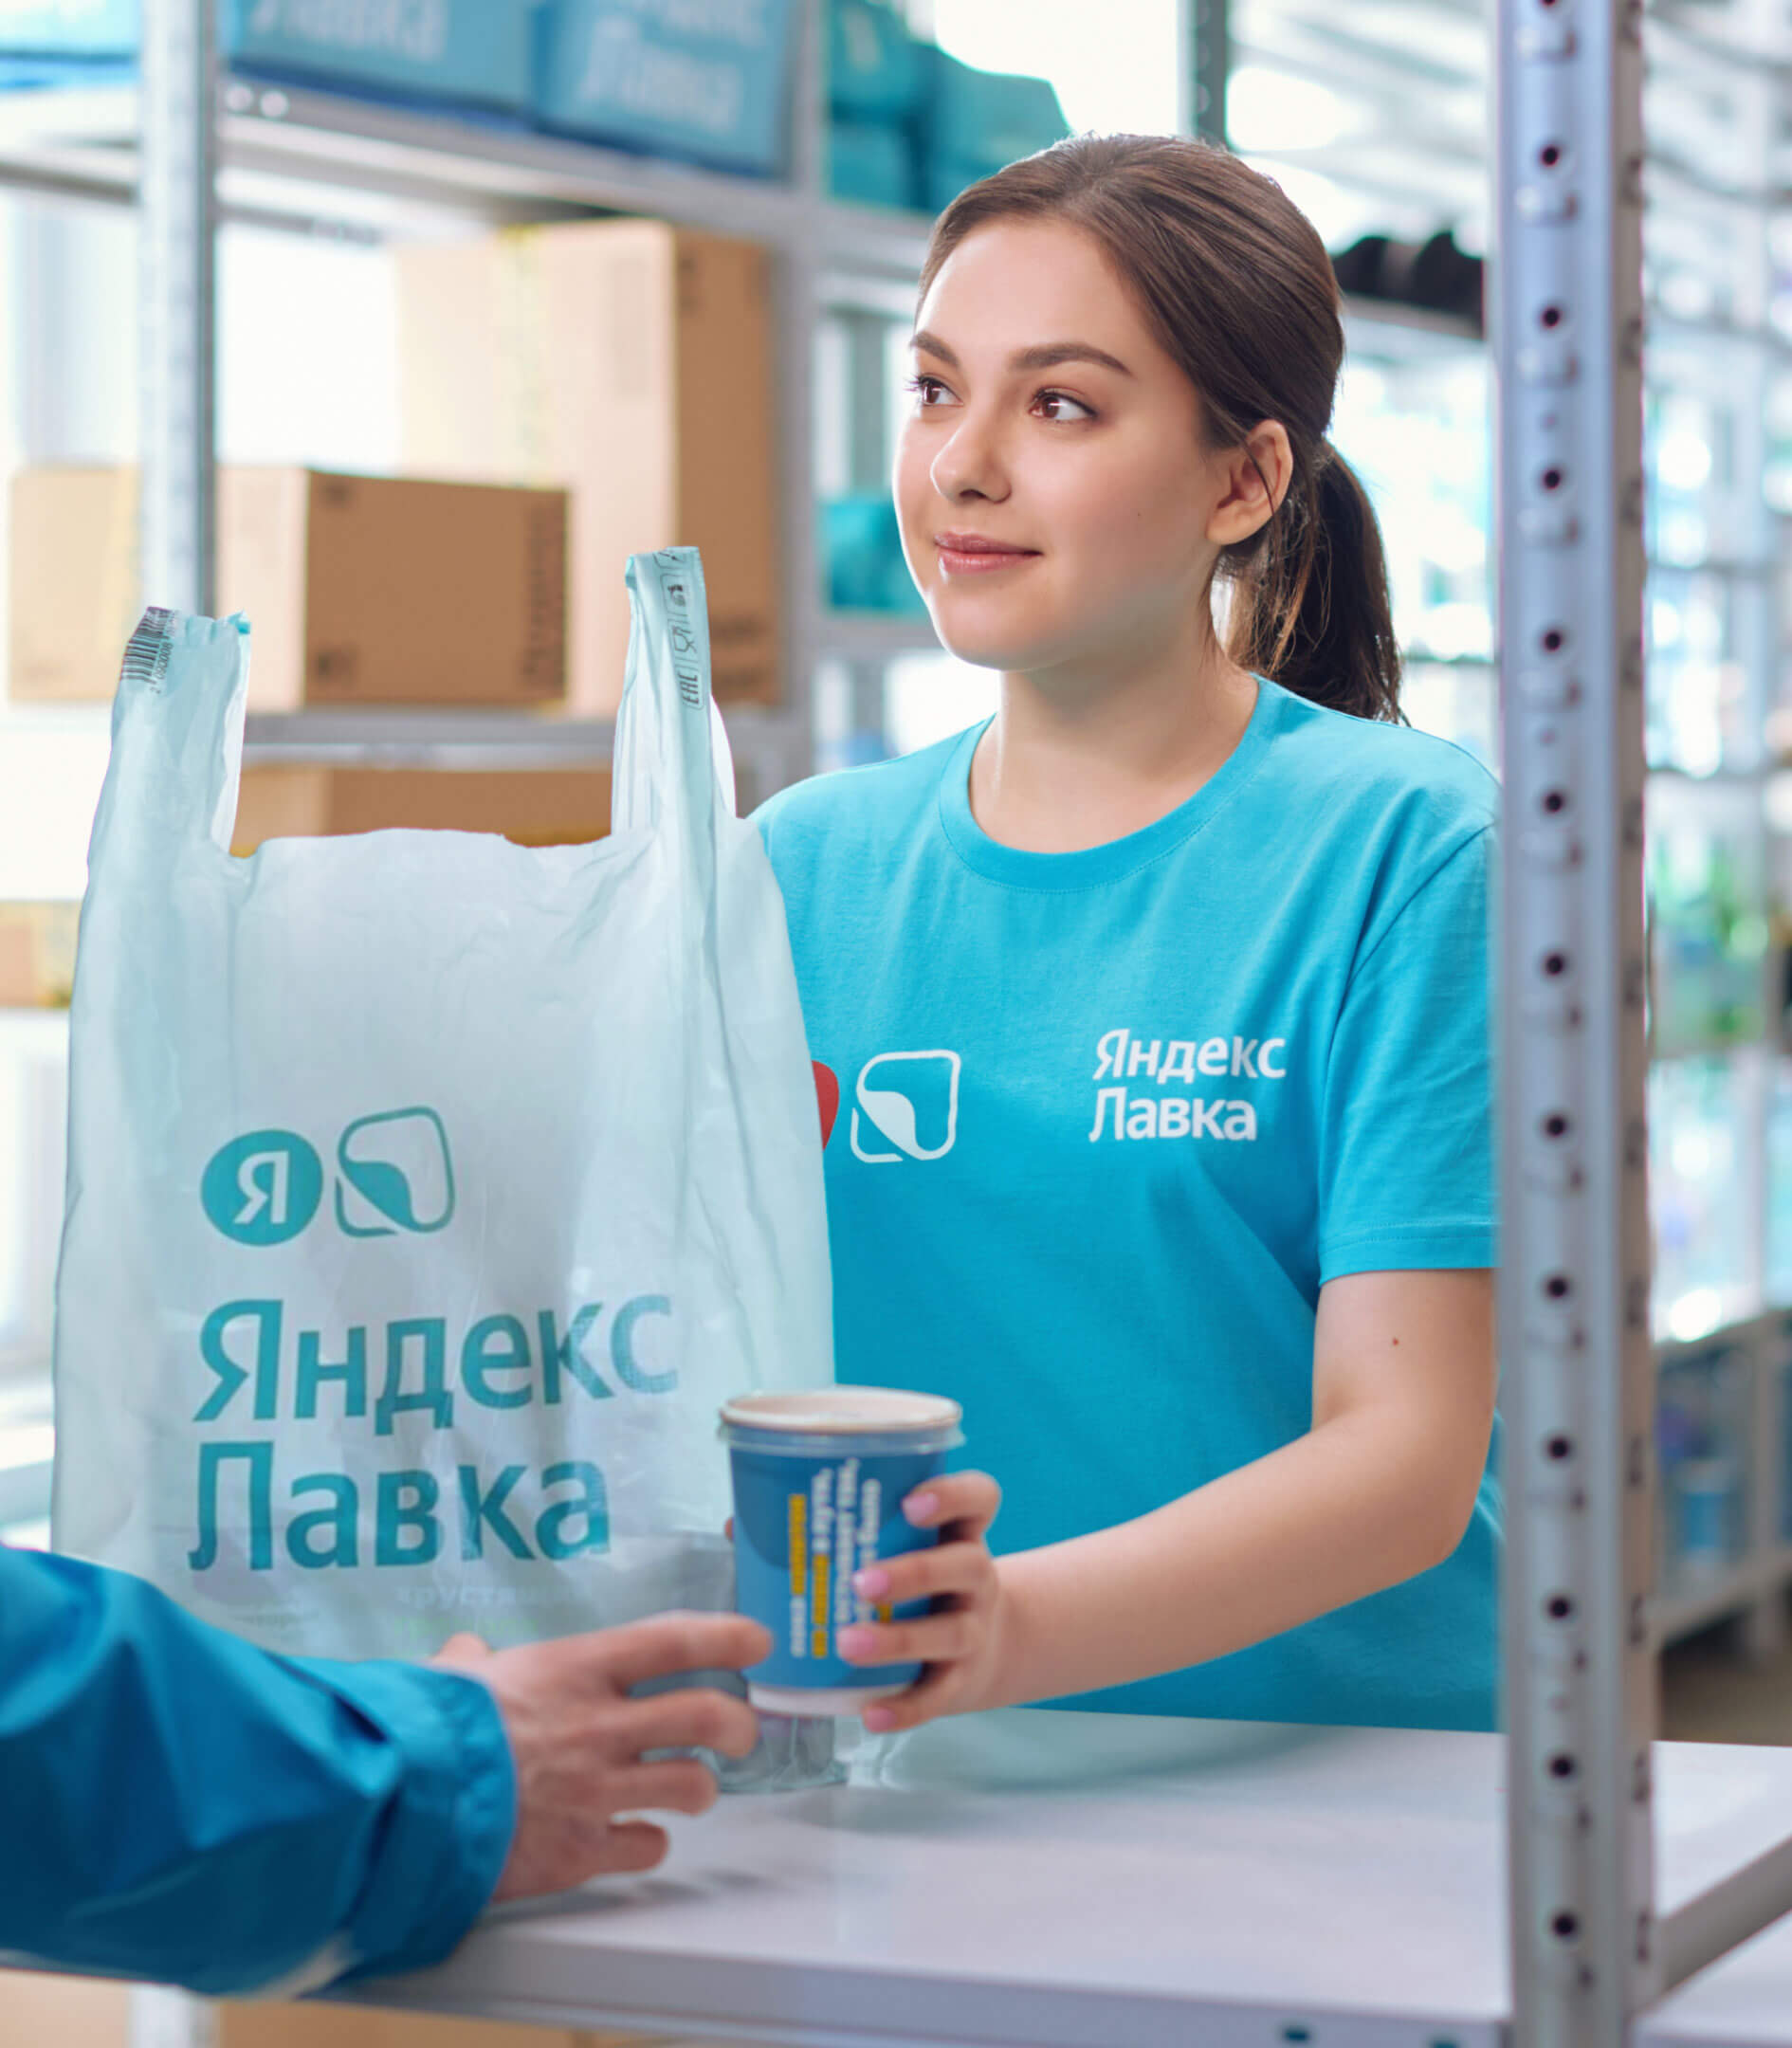 Yandex Lavka order picker